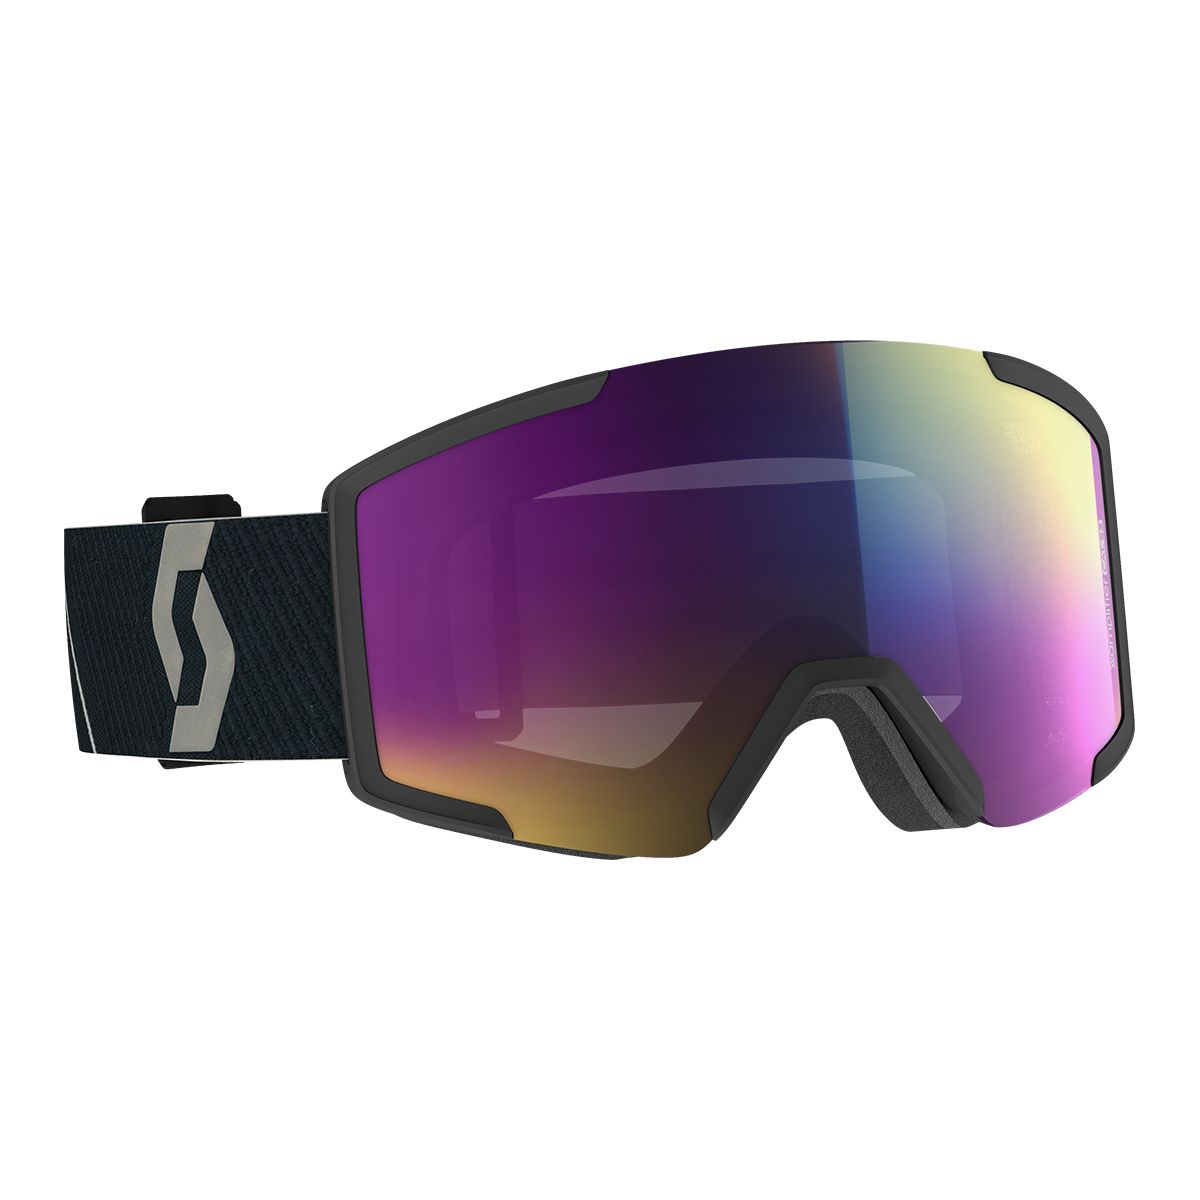 Scott Shield Ski & Snowboard Goggles 2021/22 Black with Enhancer Teal Chrome Lens